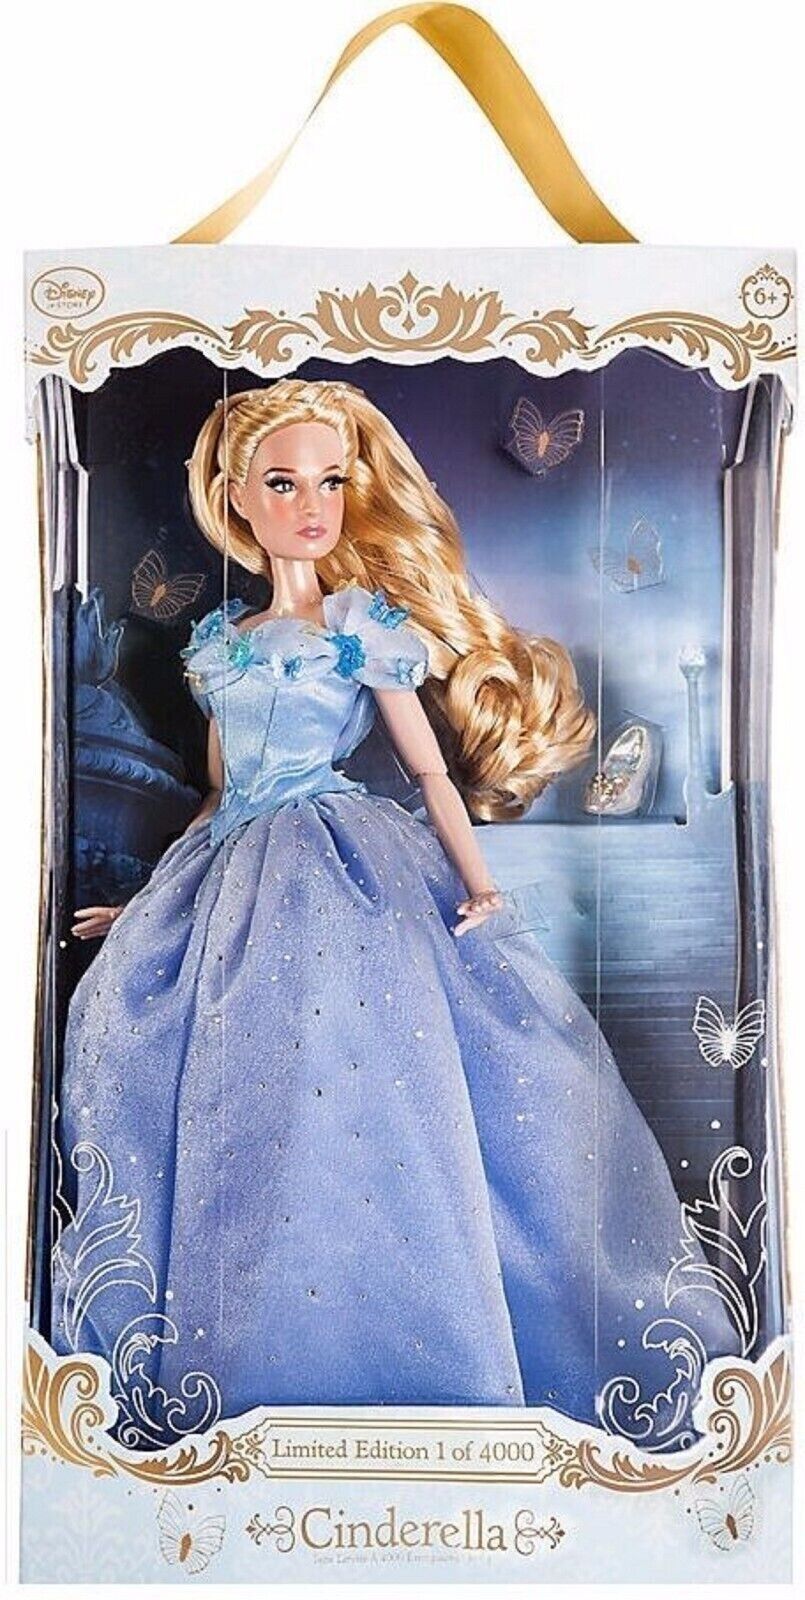 Disney Cinderella 2015 Live Action Movie Limited Edition Doll 17”